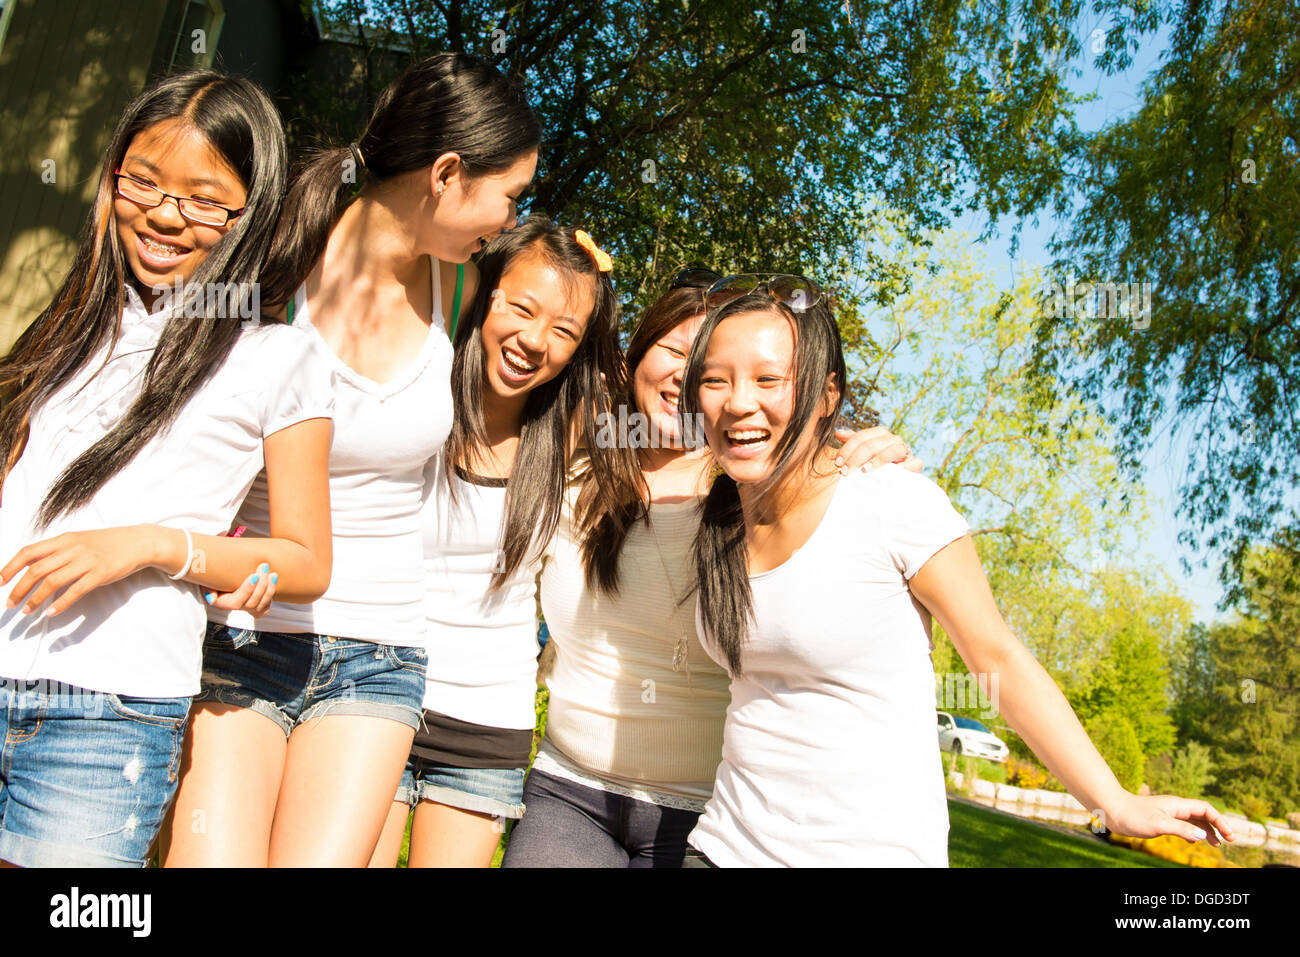 Five girls wearing white t-shirts laughing Stock Photo